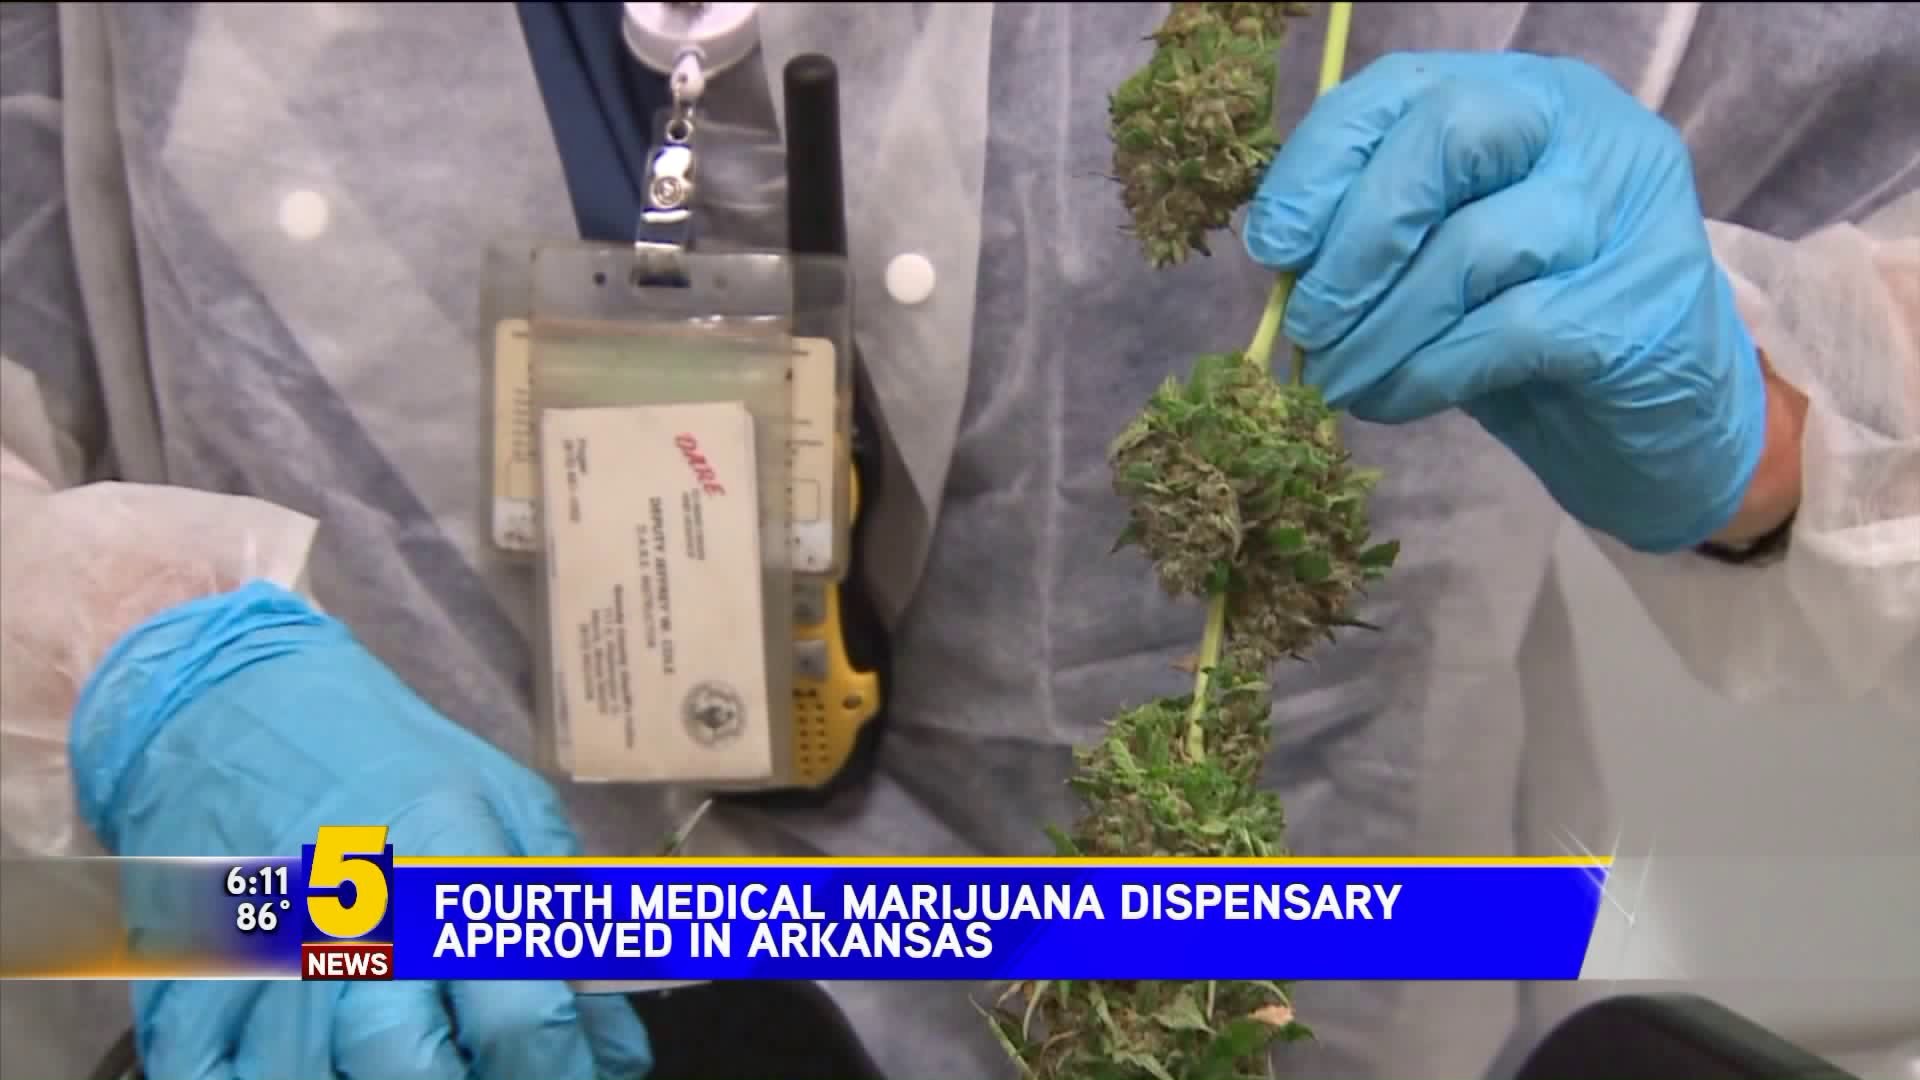 Fourth Medical Marijuana Dispensary Approved in Arkansas